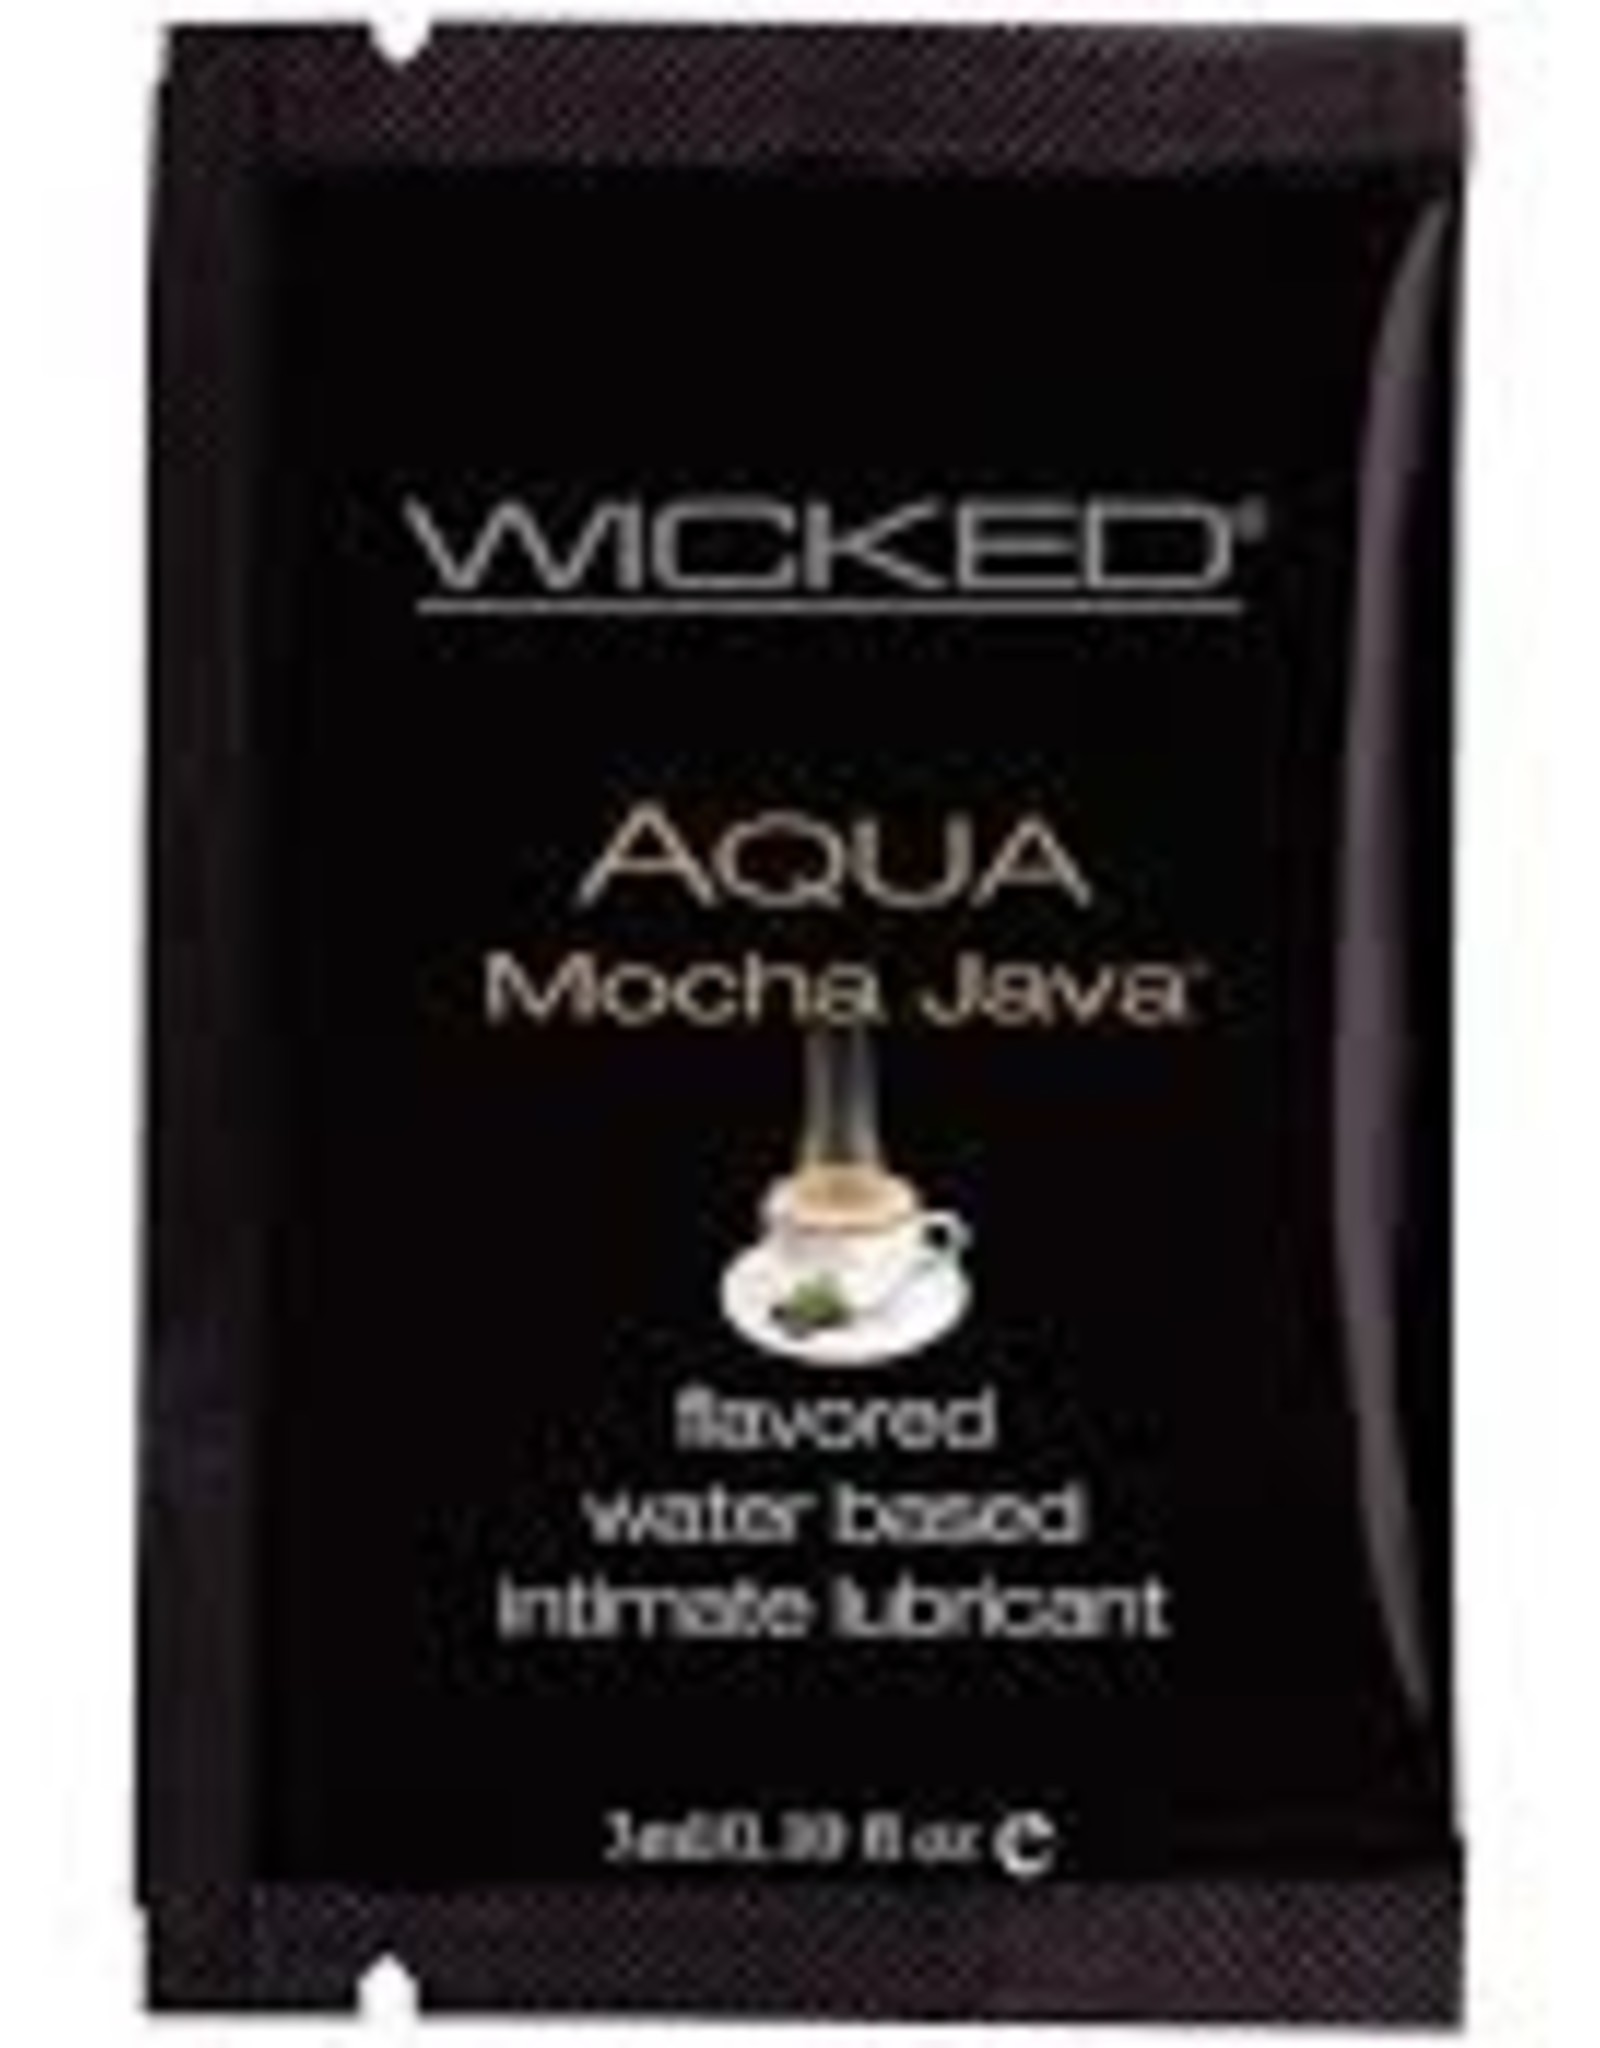 Wicked Sensual Care Aqua Water Based Lubricant - .1 oz Mocha Java